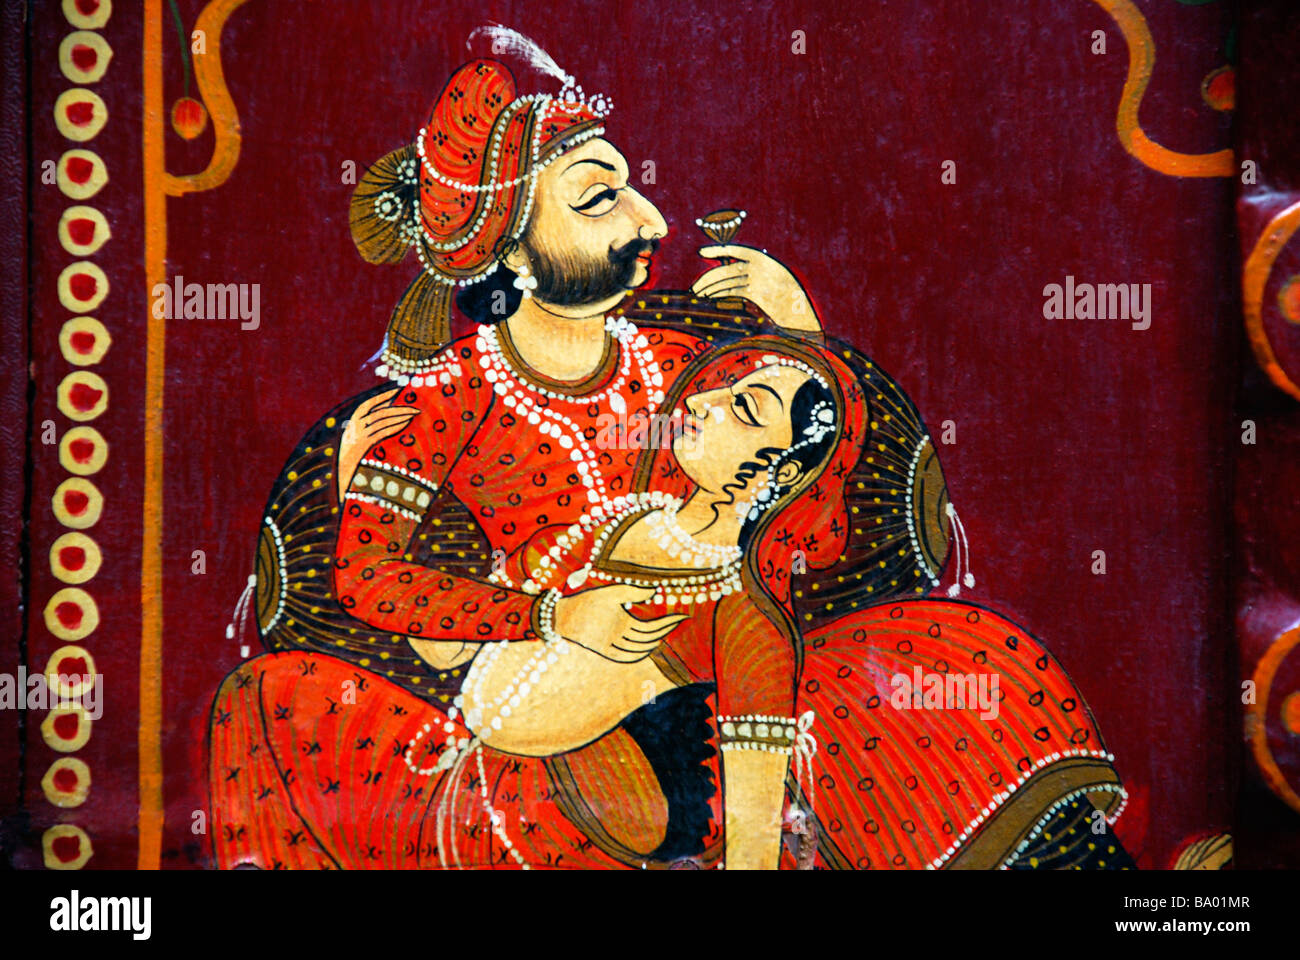 Top 999+ rajasthani painting images – Amazing Collection rajasthani painting images Full 4K